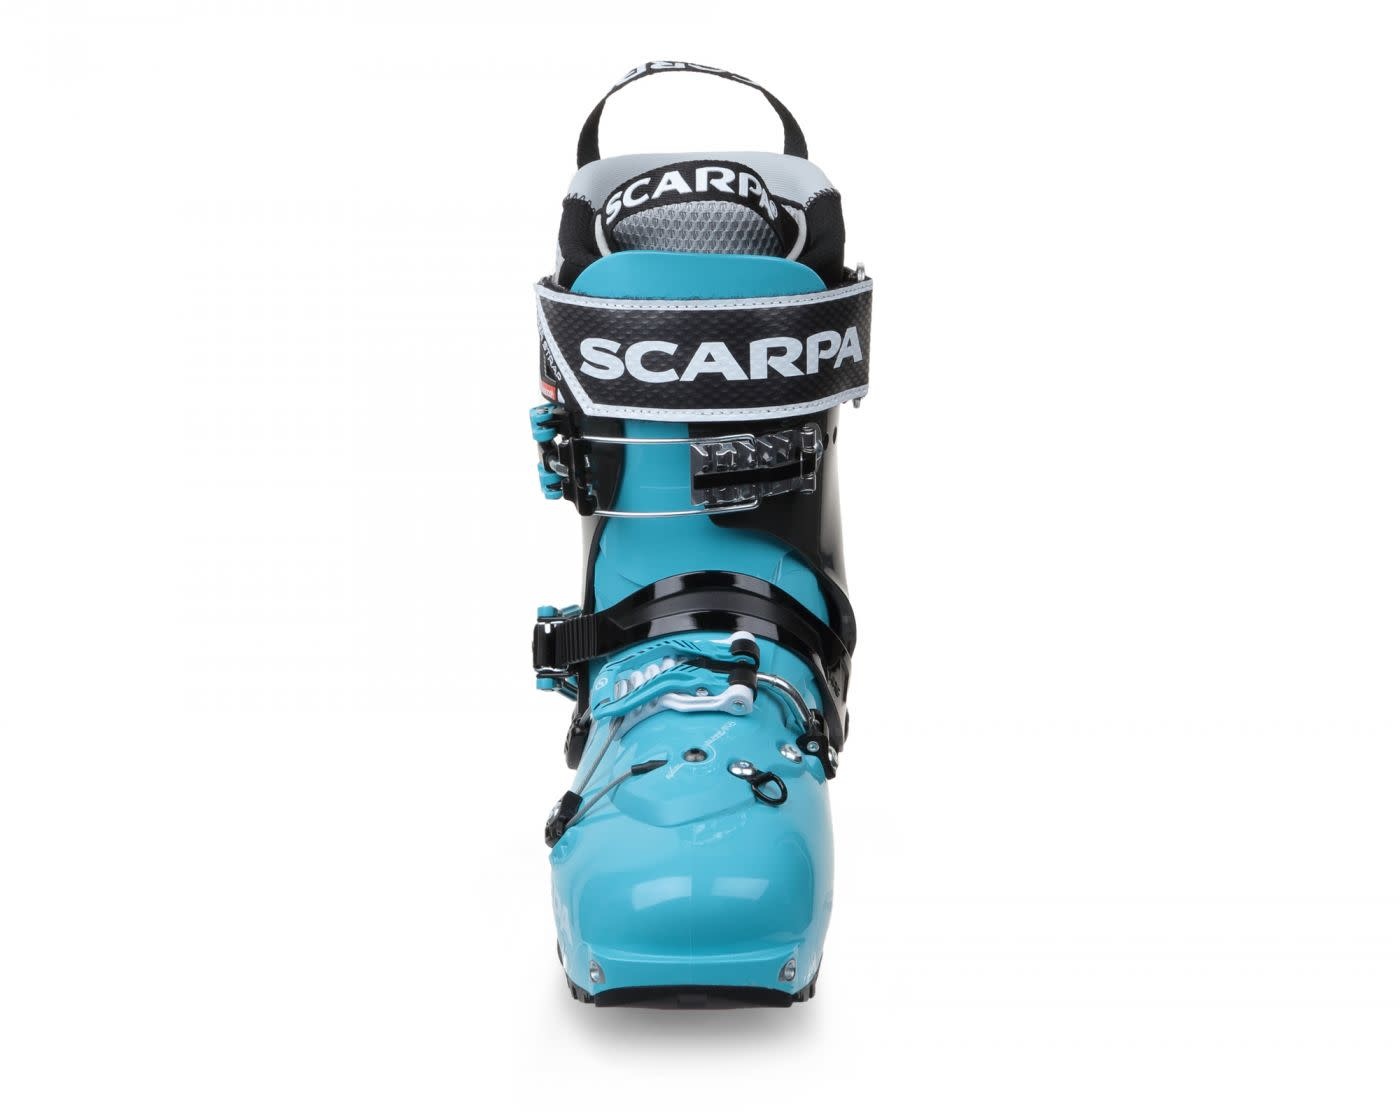 Scarpa Gea A.T. Ski Boots | The 